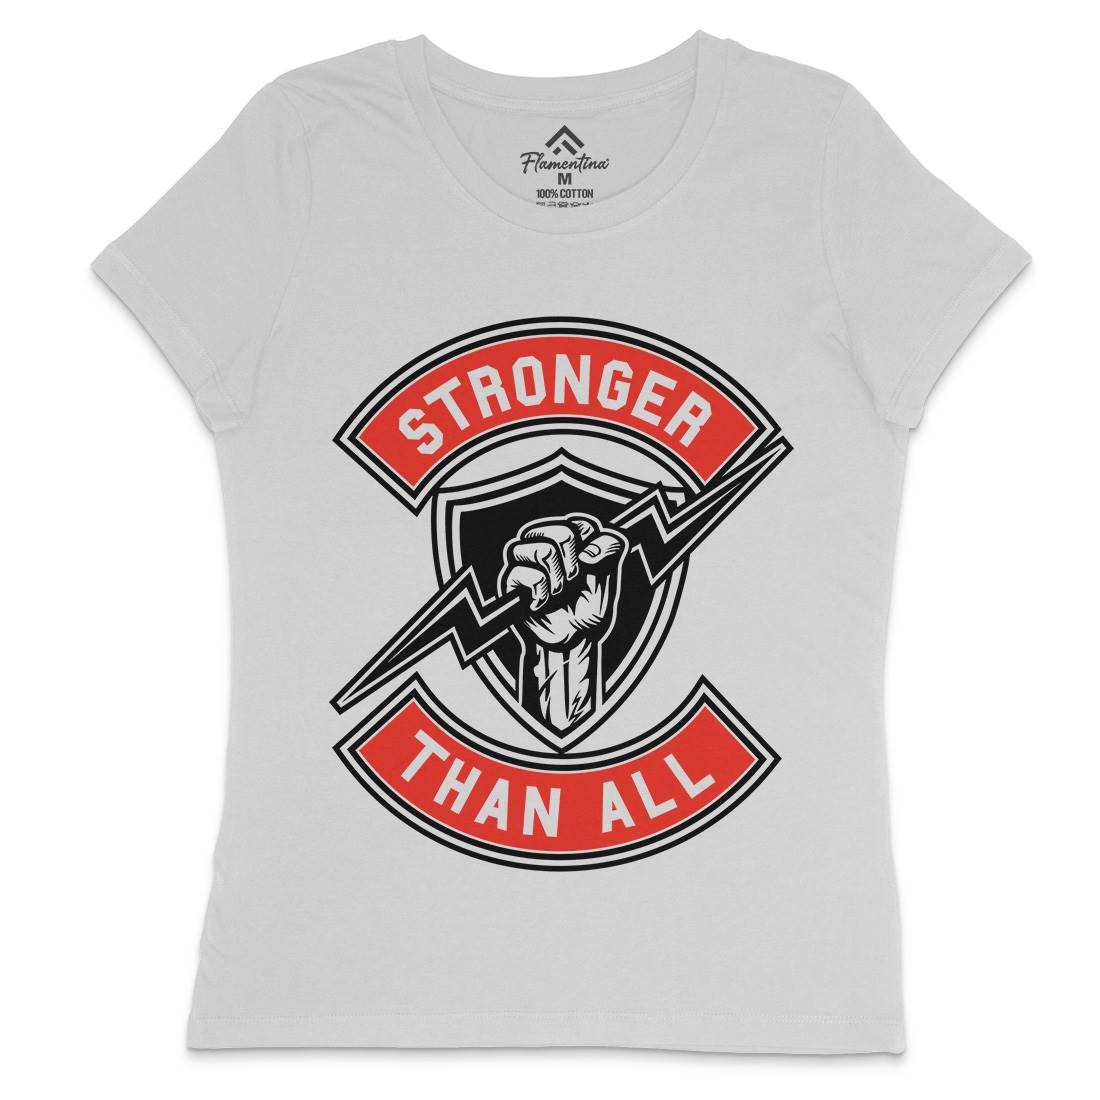 Stronger Than All Womens Crew Neck T-Shirt Gym A290